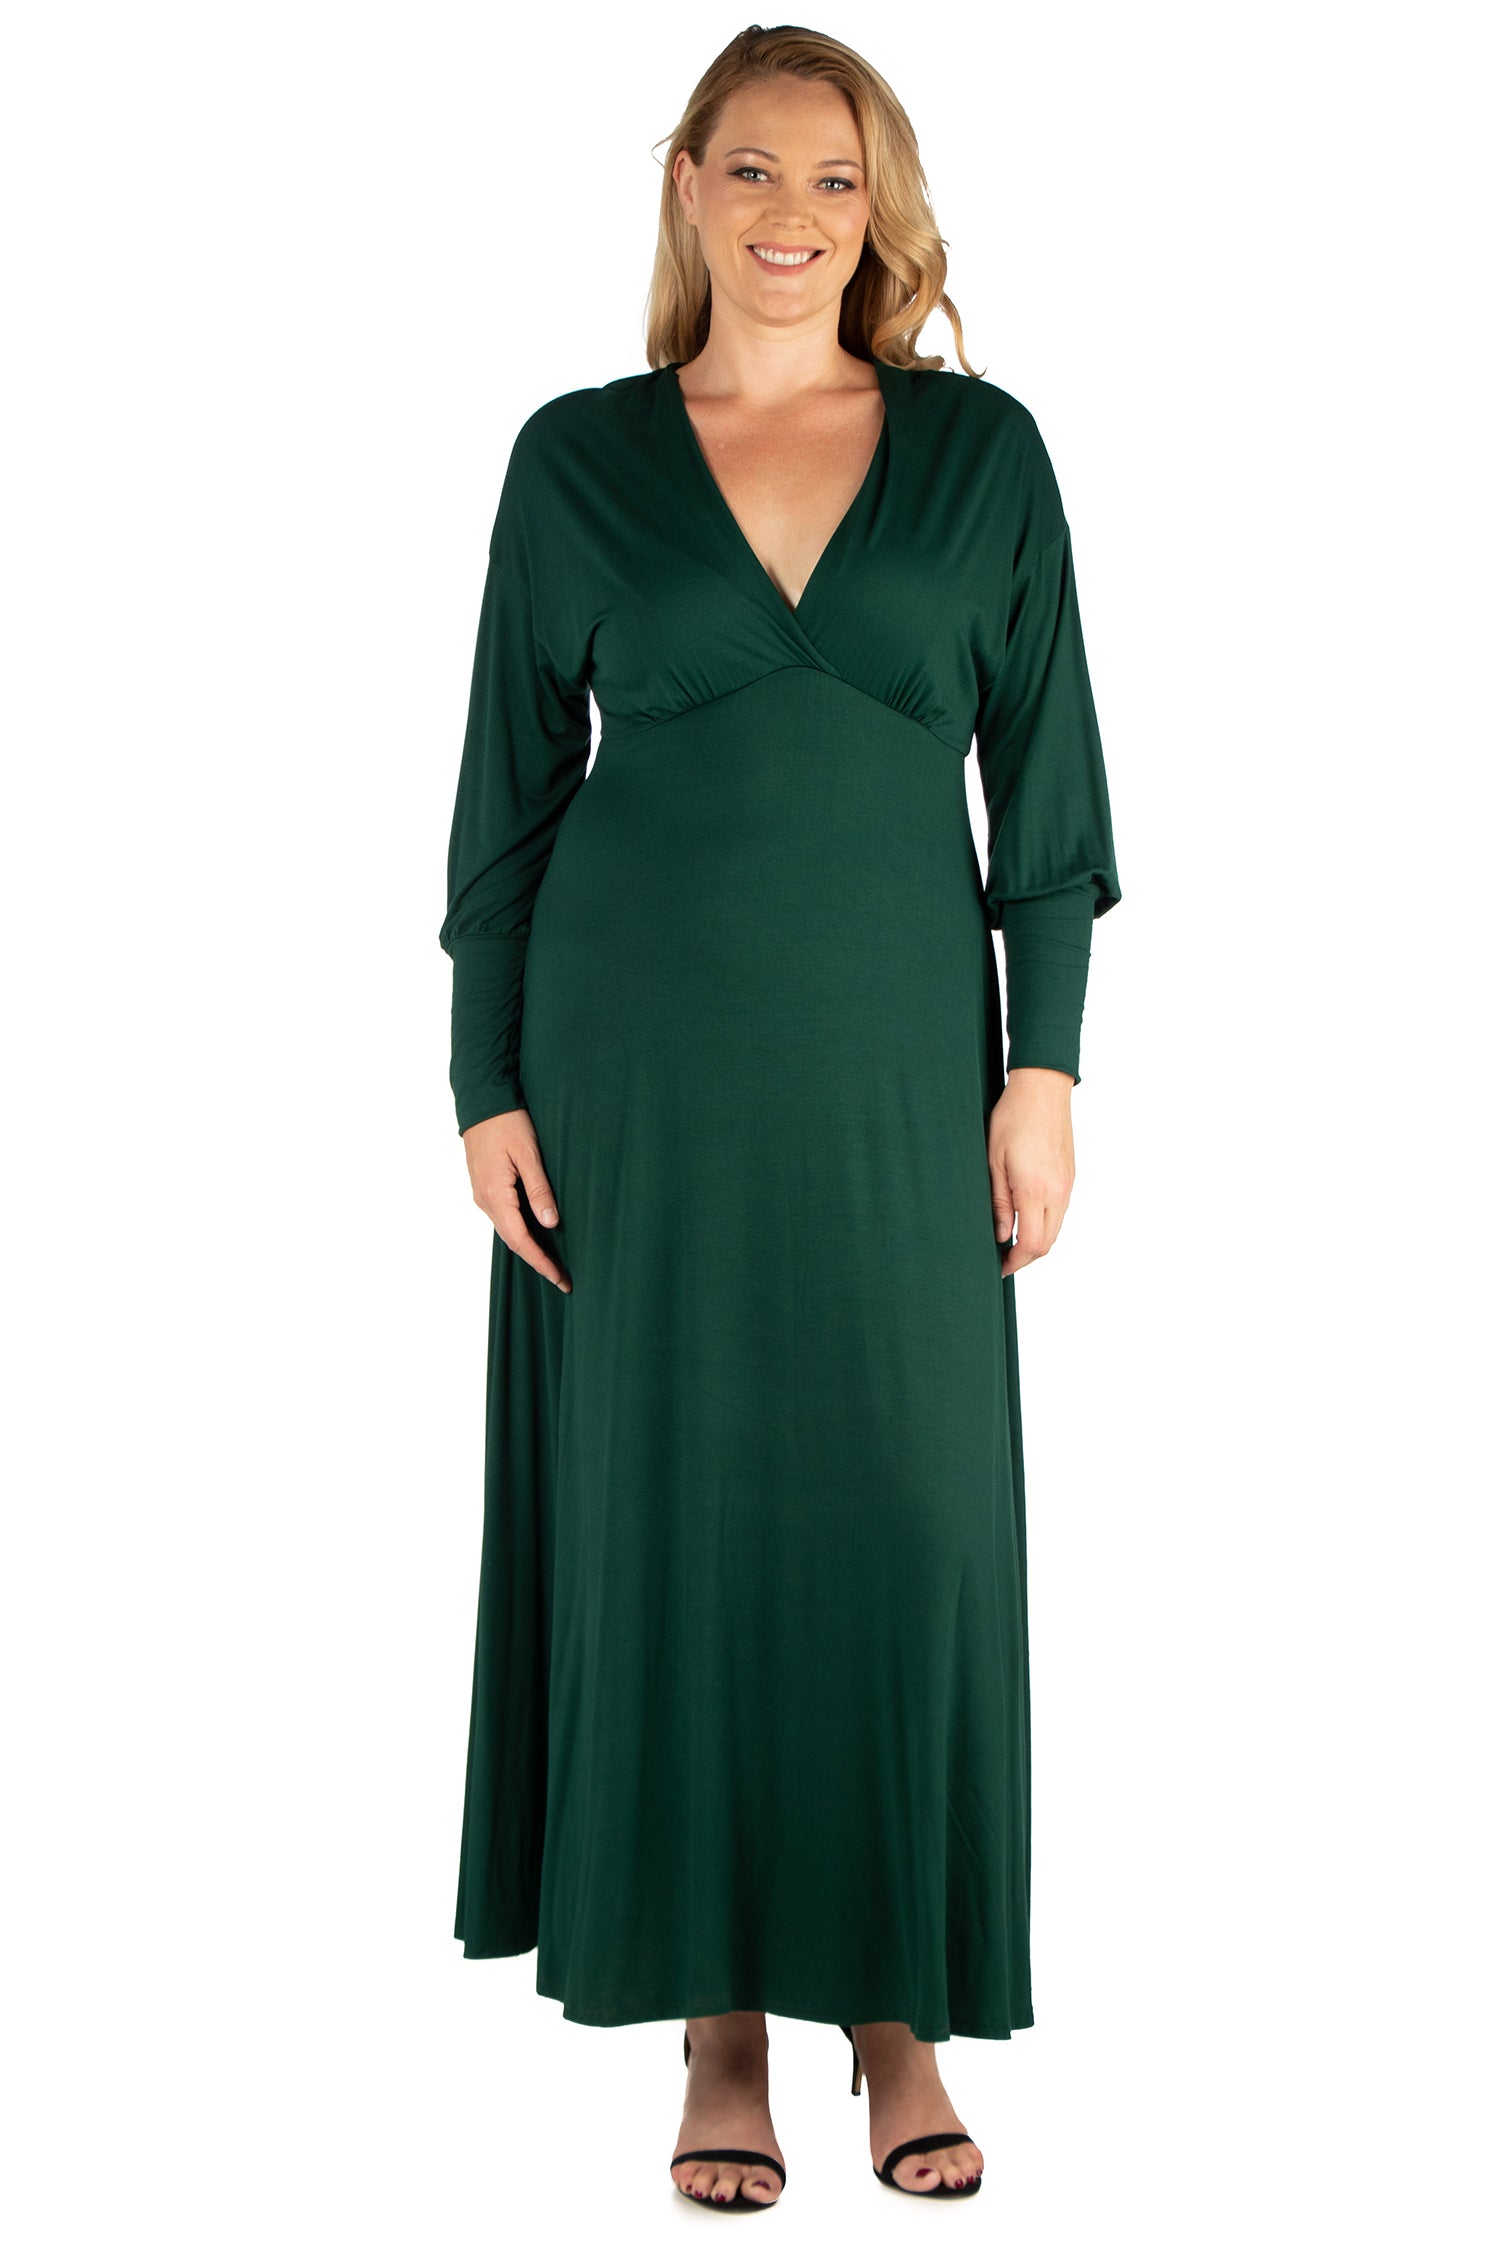 24seven Comfort Apparel Plus Size Womens Long Sleeve Maxi Dress 